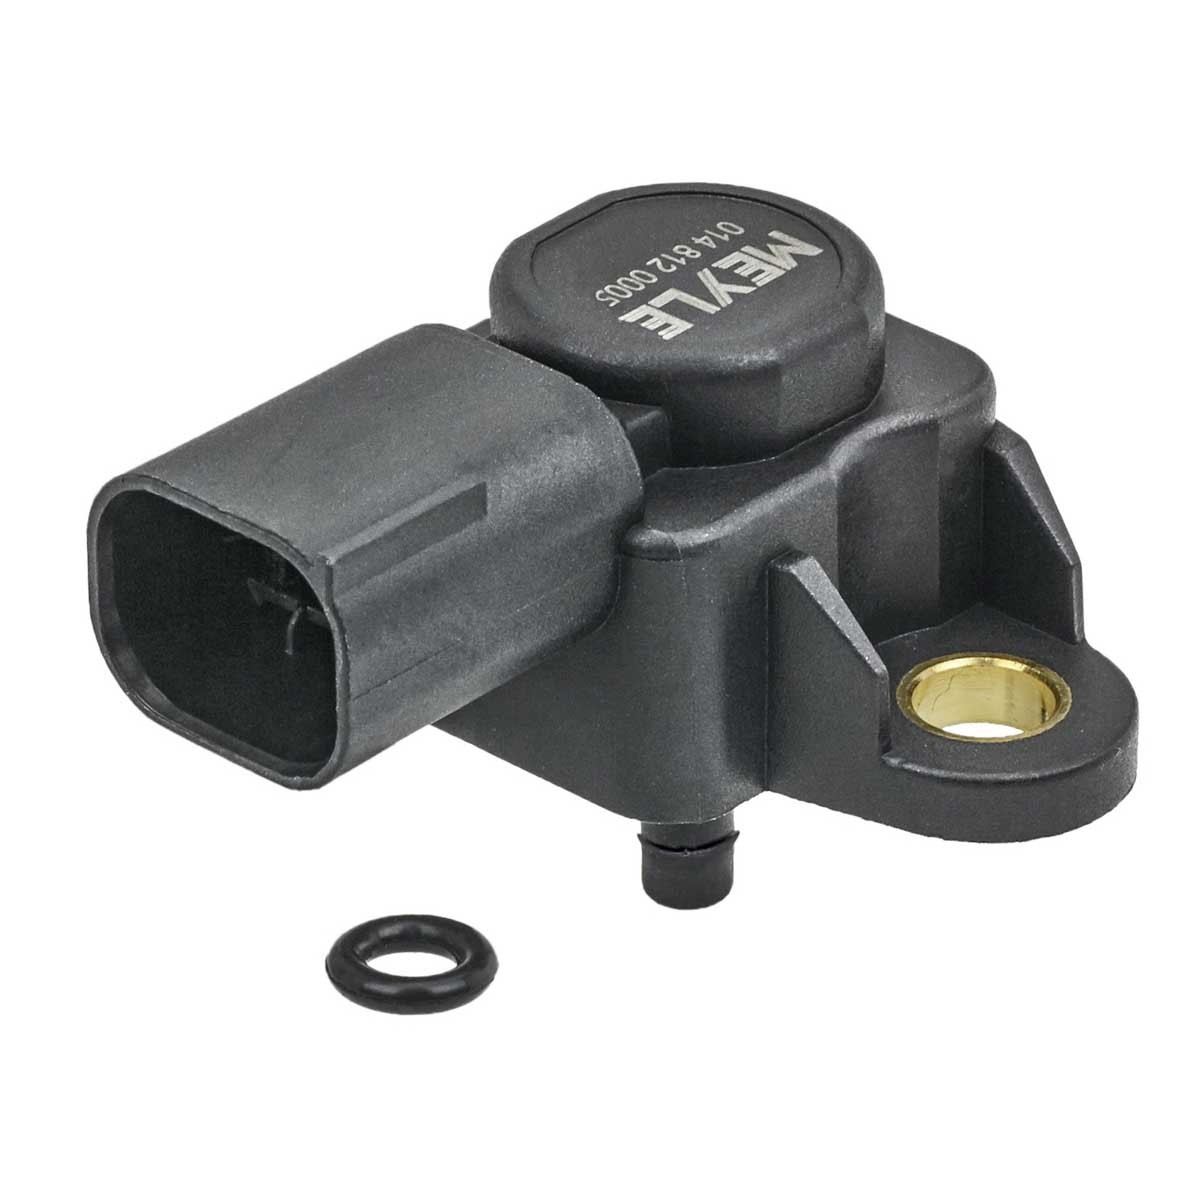 MEX0854 MEYLE 30-148120005 Intake manifold pressure sensor 1362 7801 387